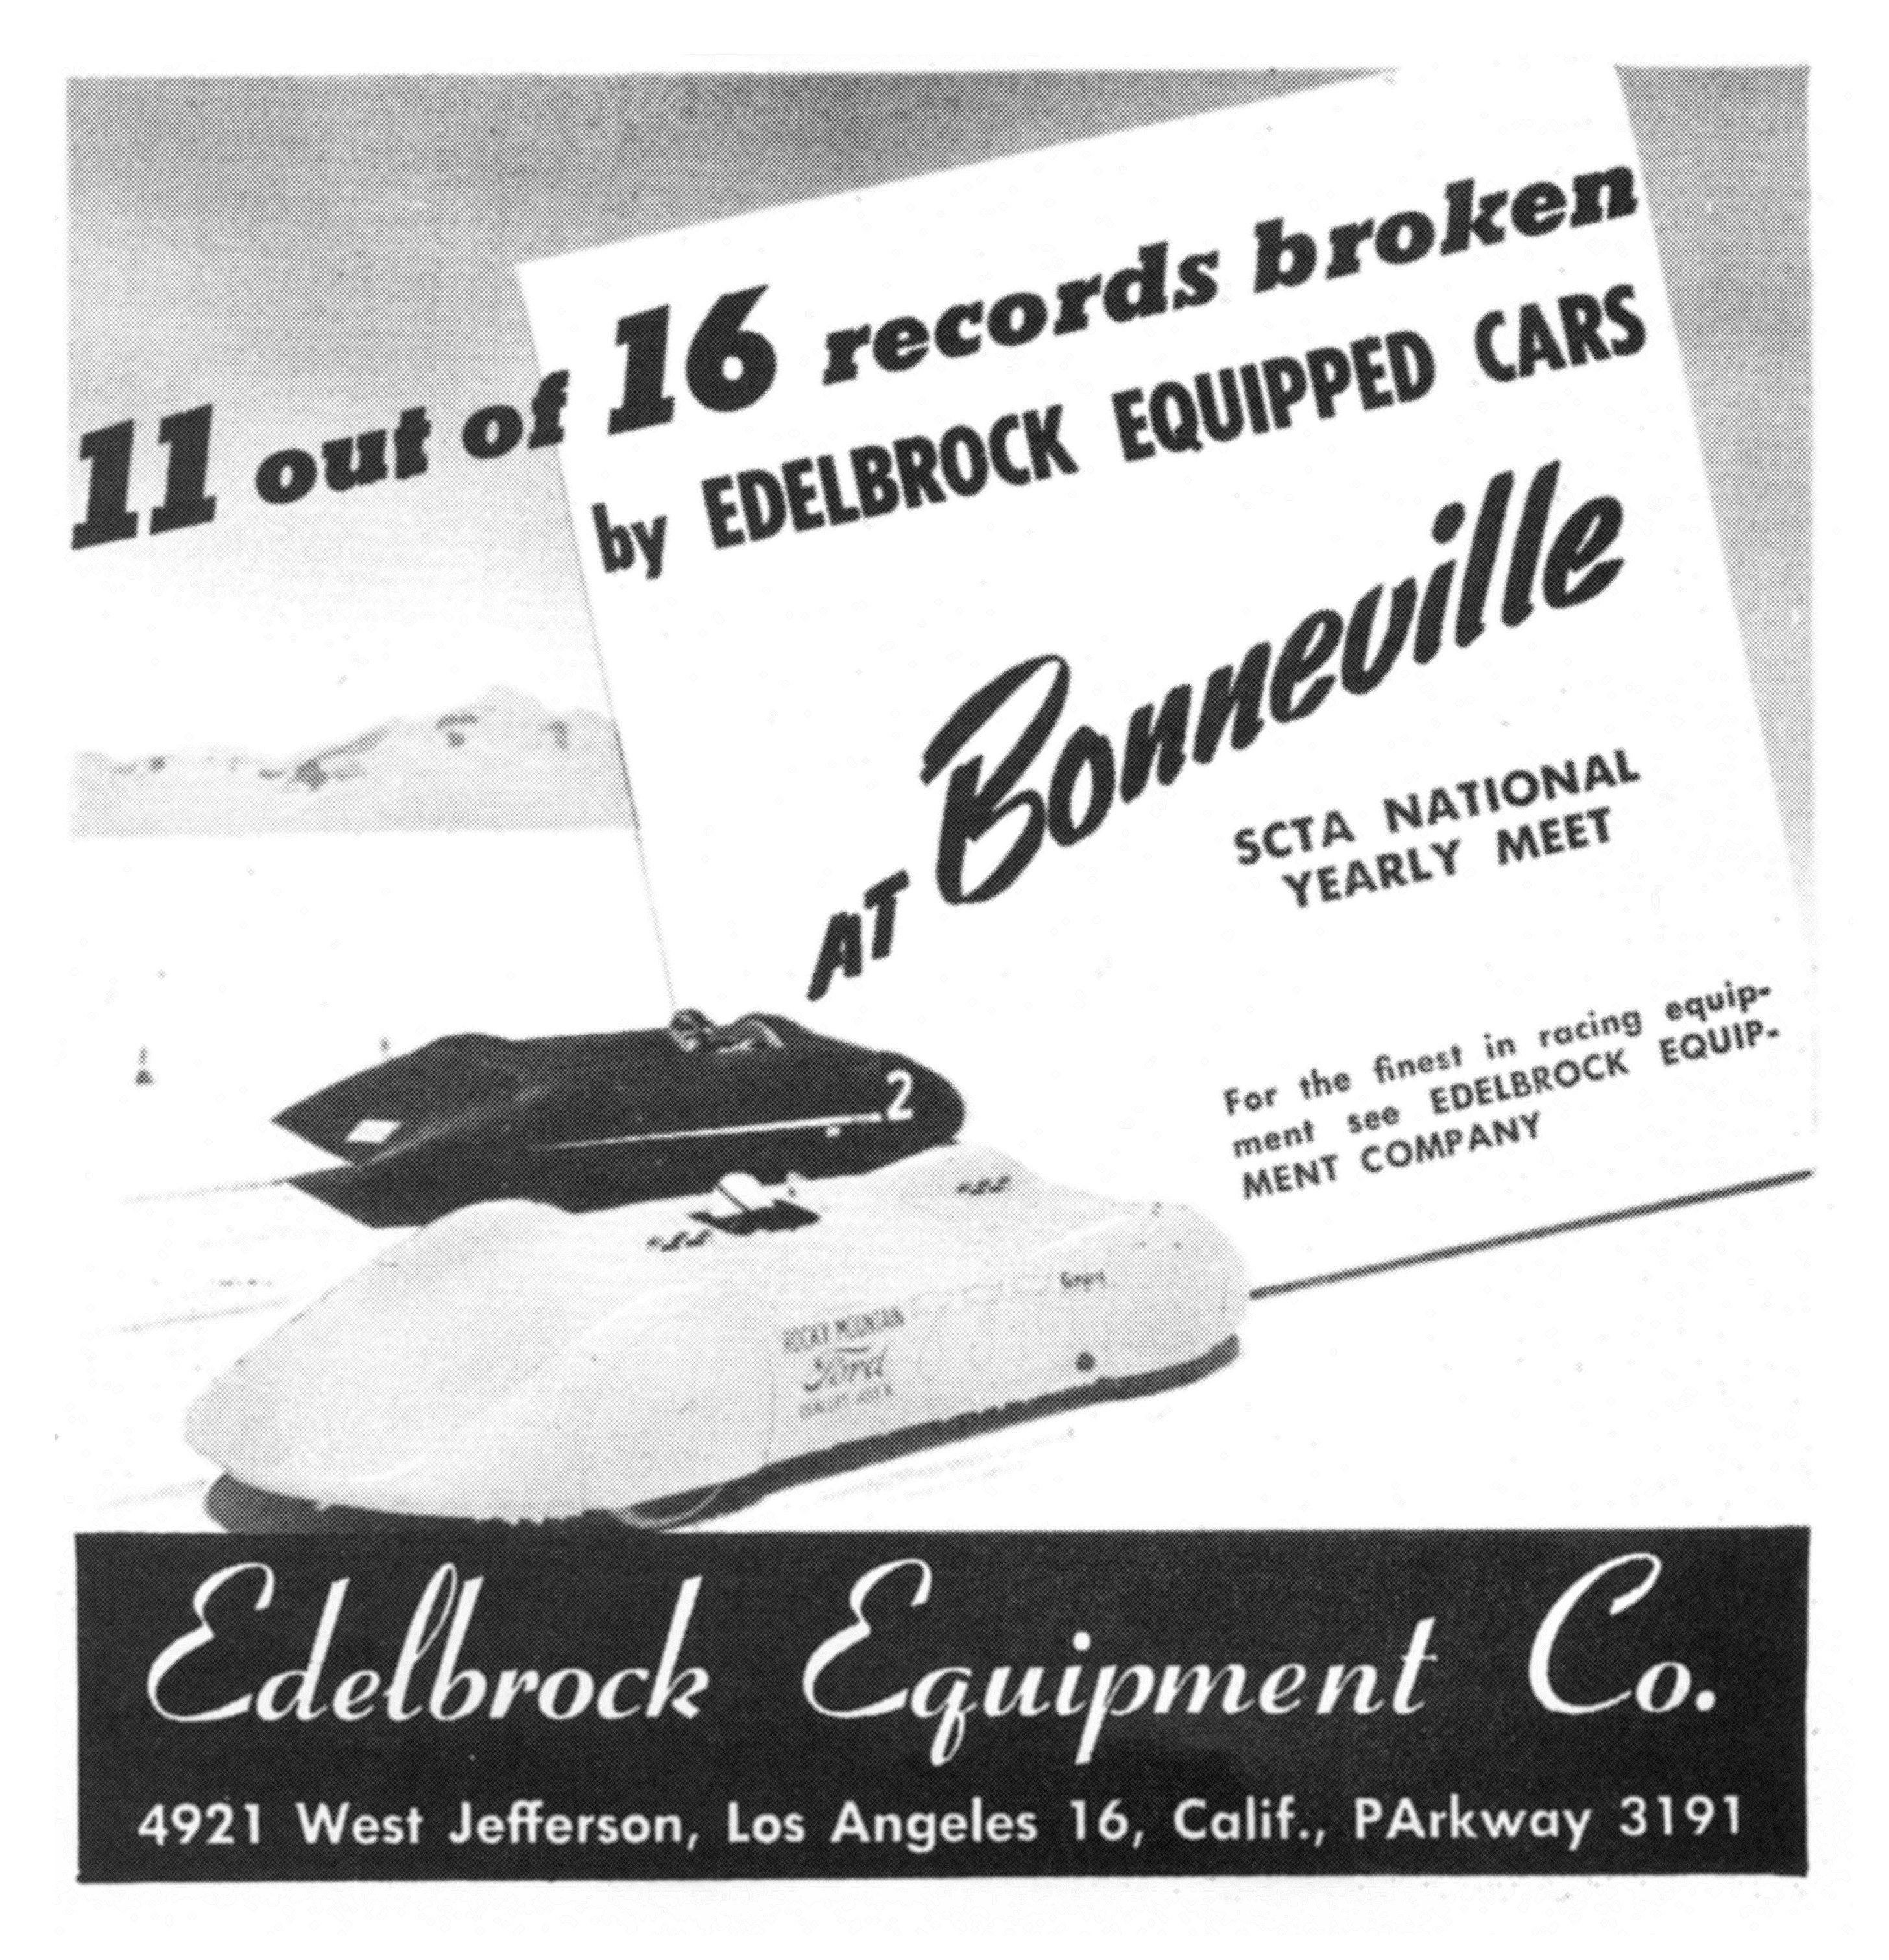 Vintage Edelbrock Equipment magazine ad